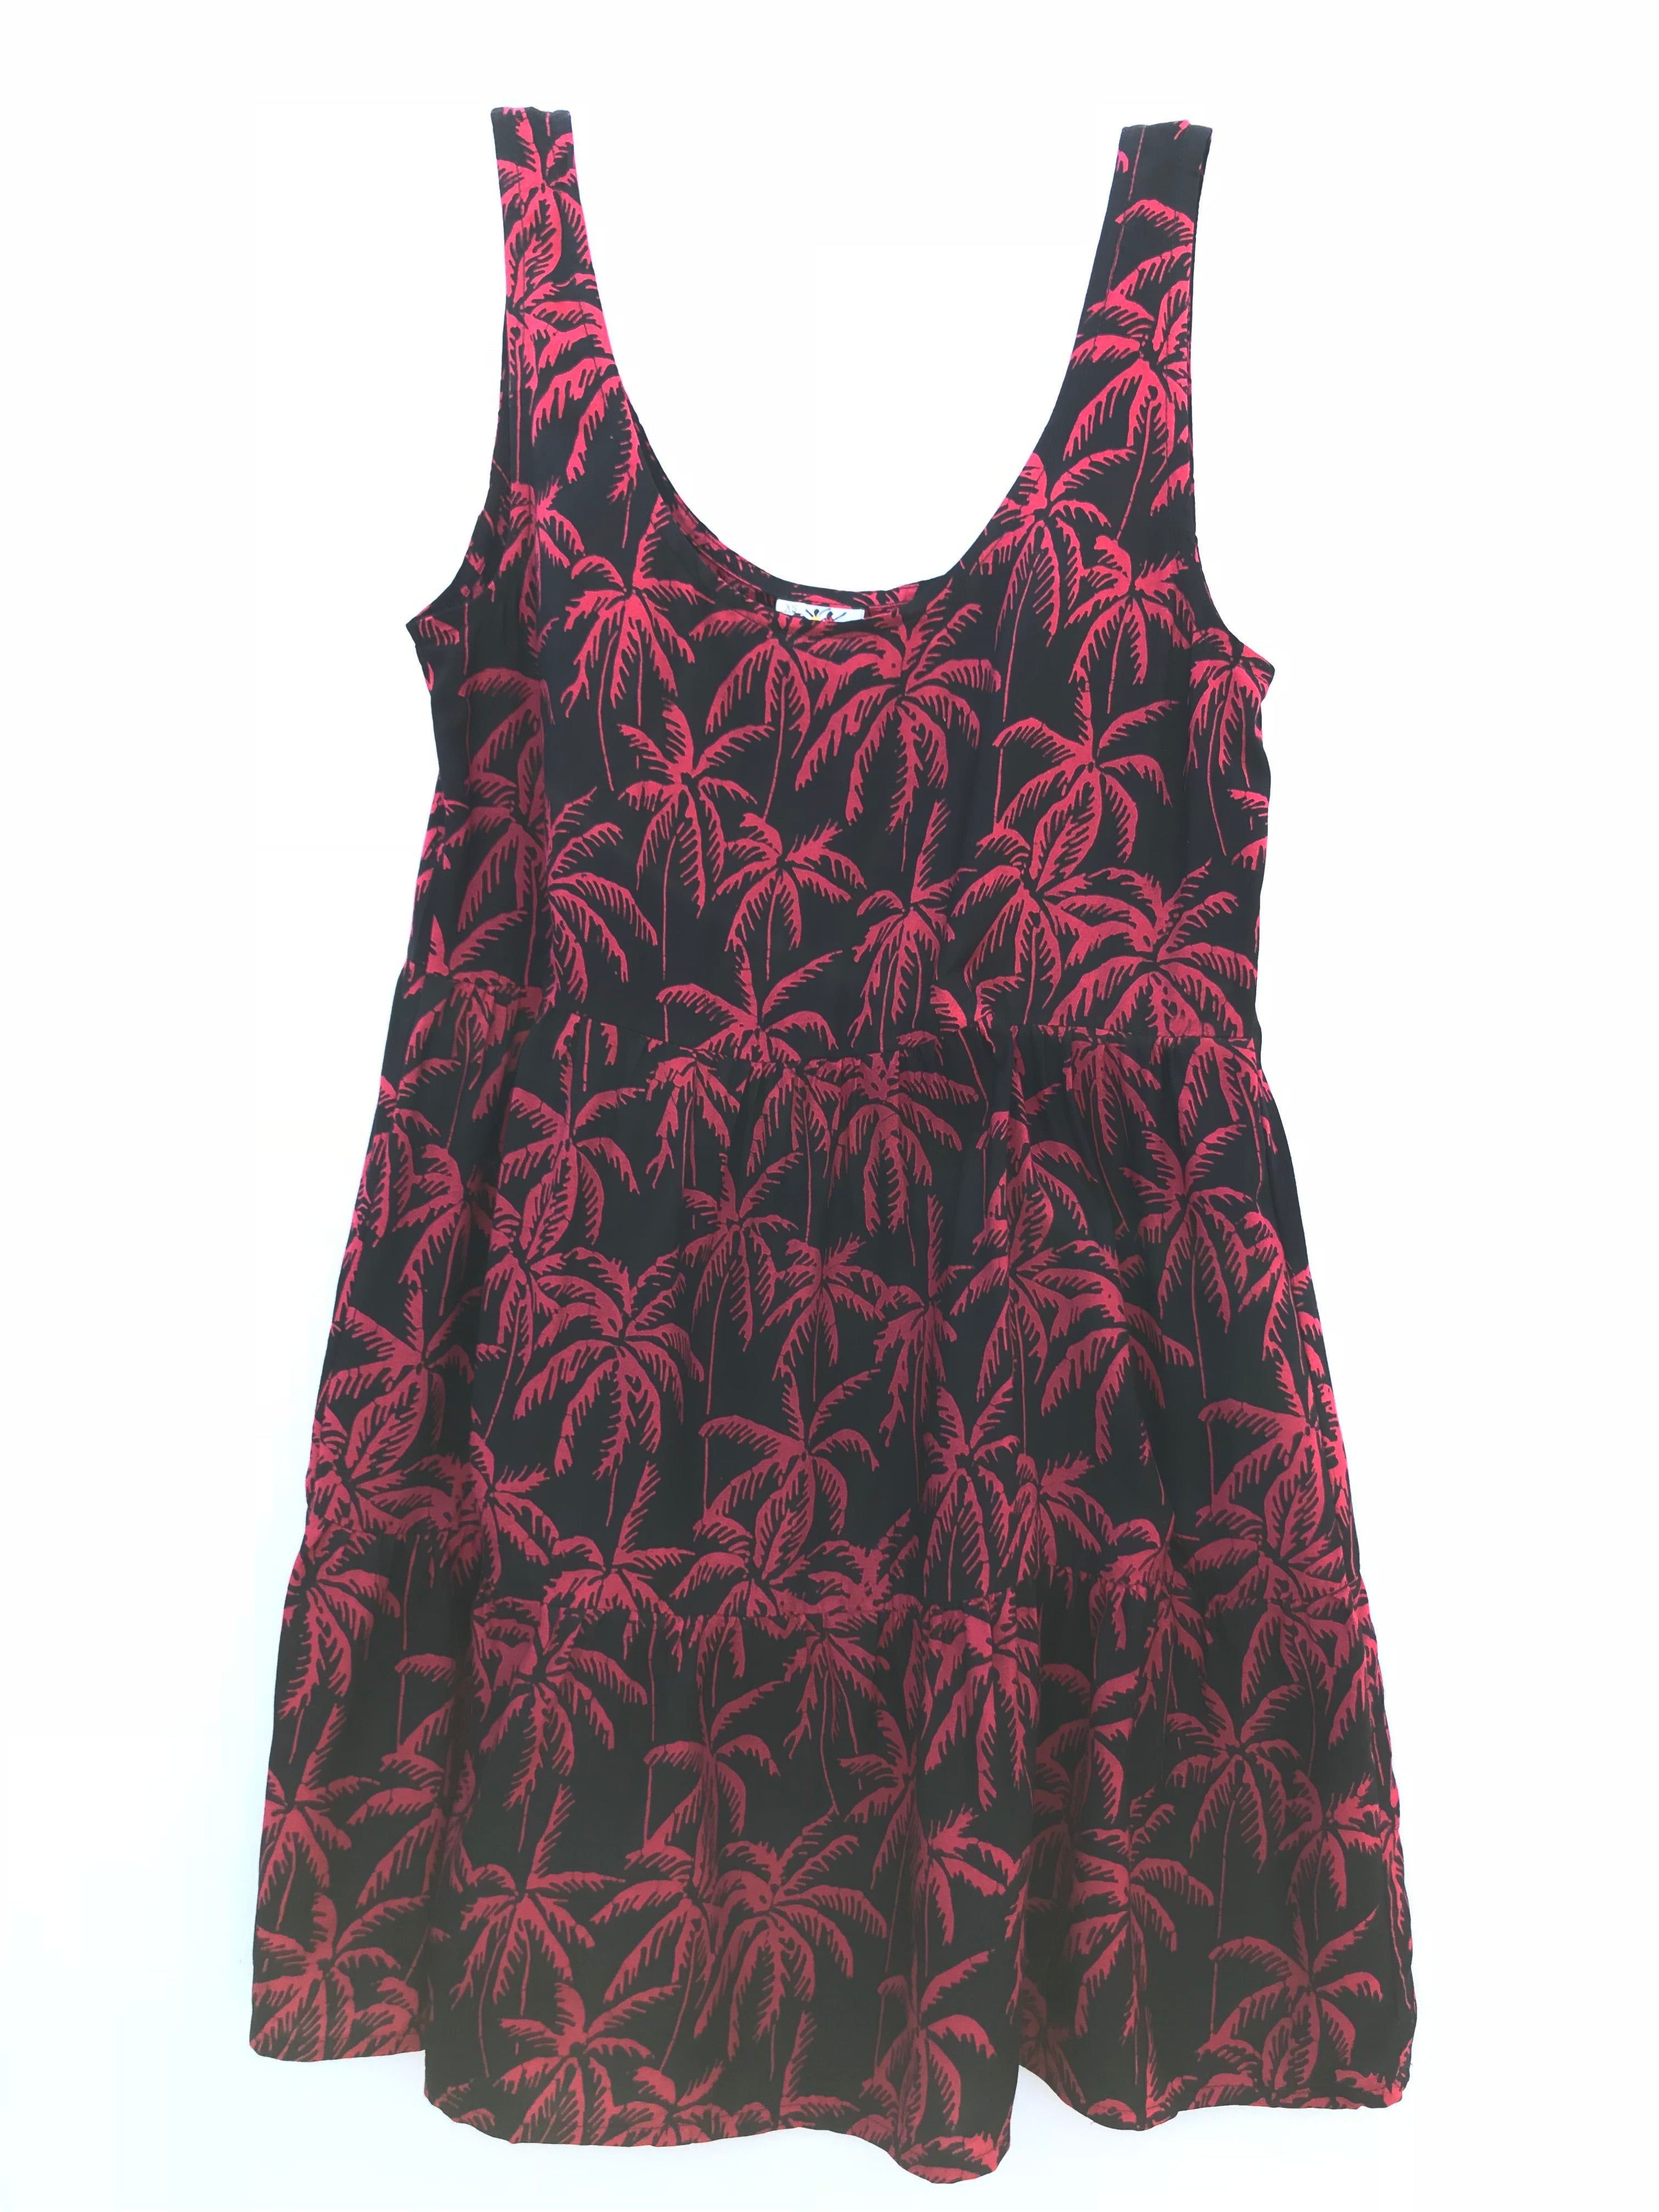 Kuta Beach Dress - Tall Palms